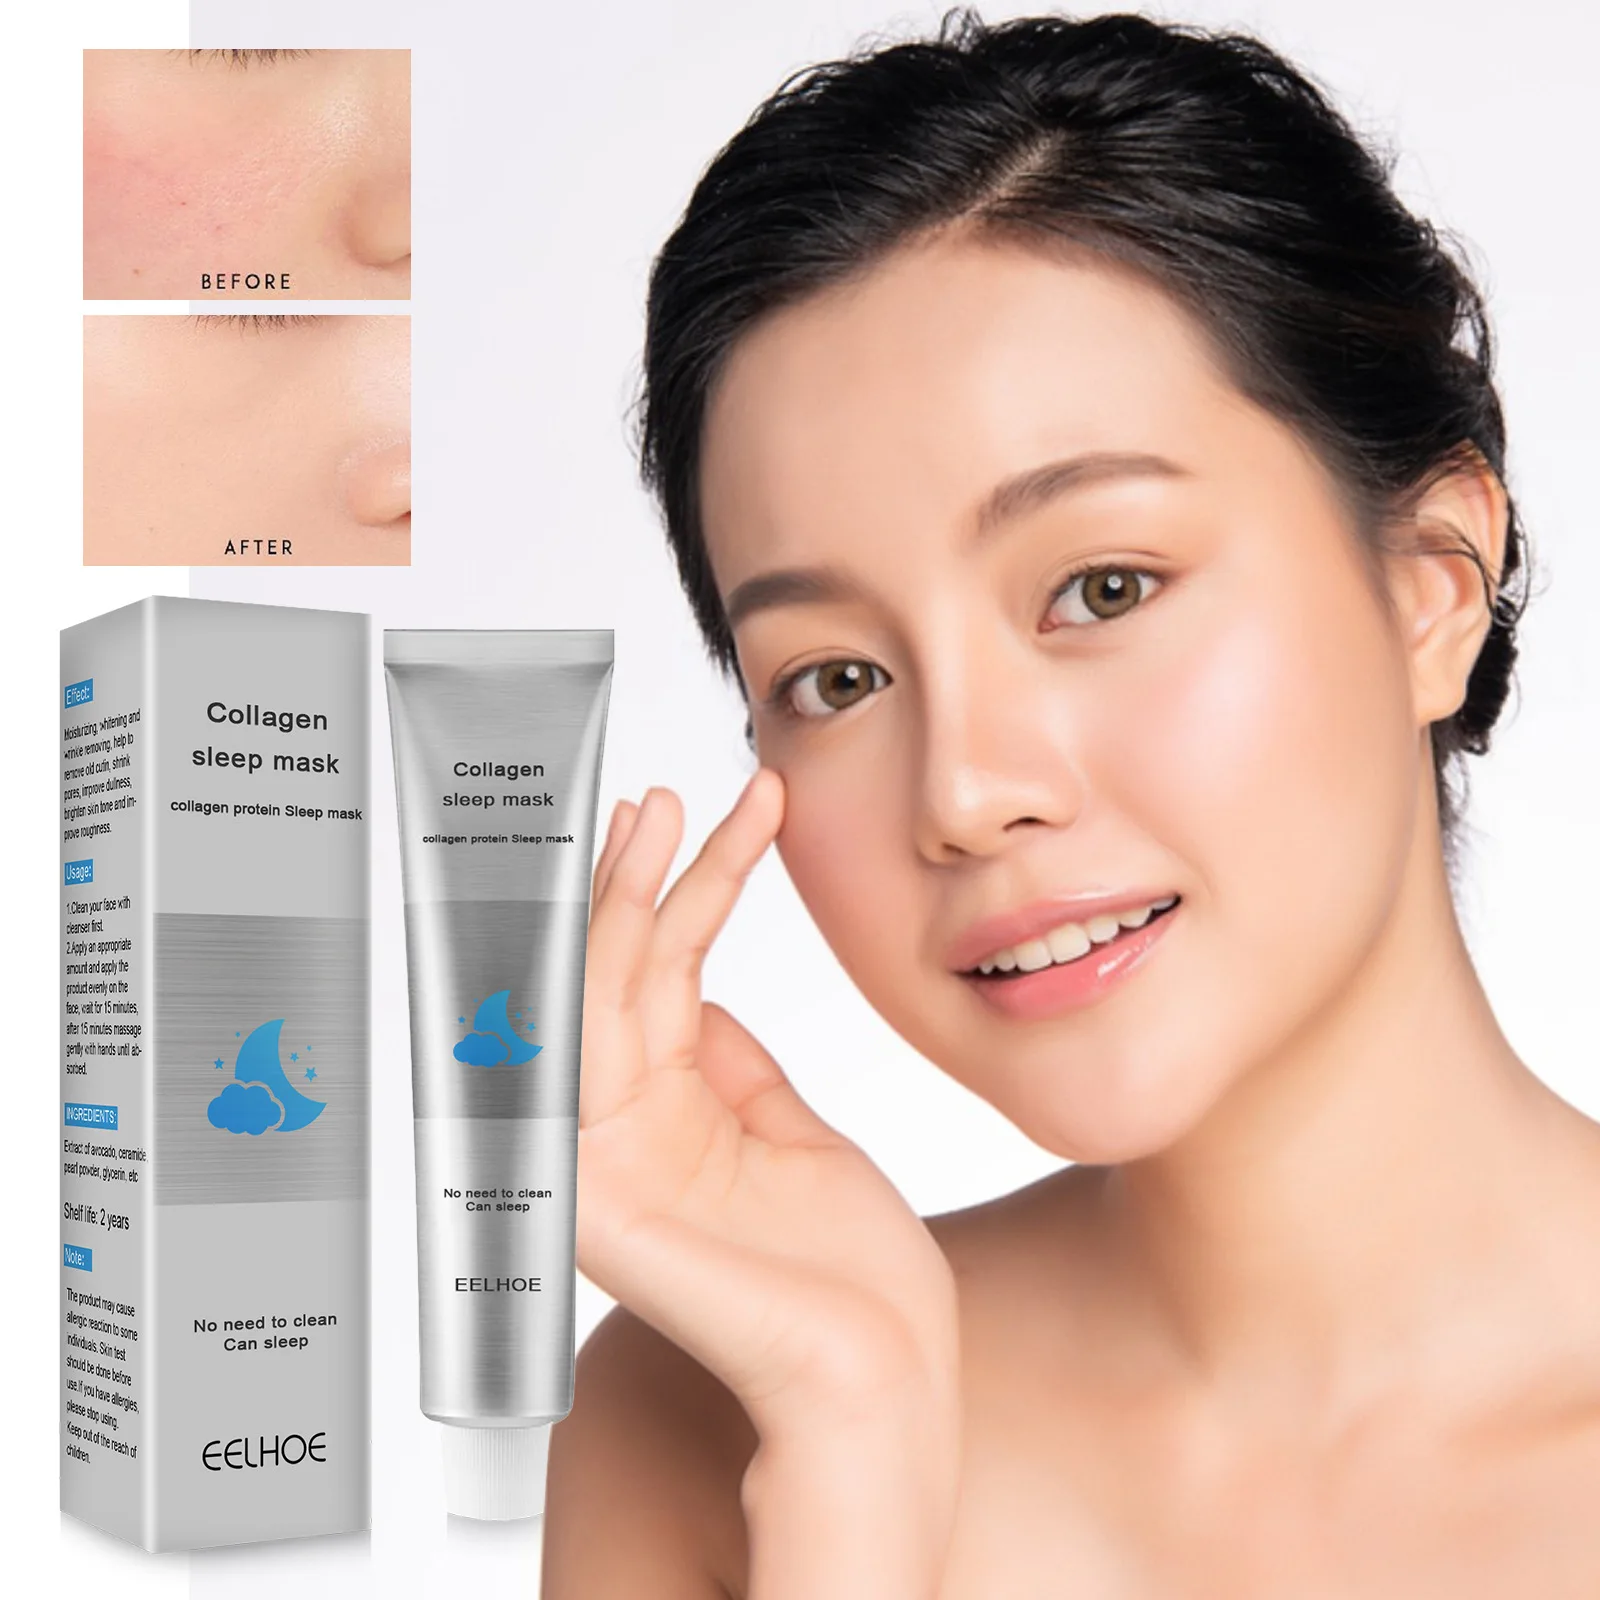 

Collagen Sleeping Face Mask Oil Control Shrink Pores Lifting Firming Repairing Anti Aging Anti Wrinkle Skin Rejuvenation 100g